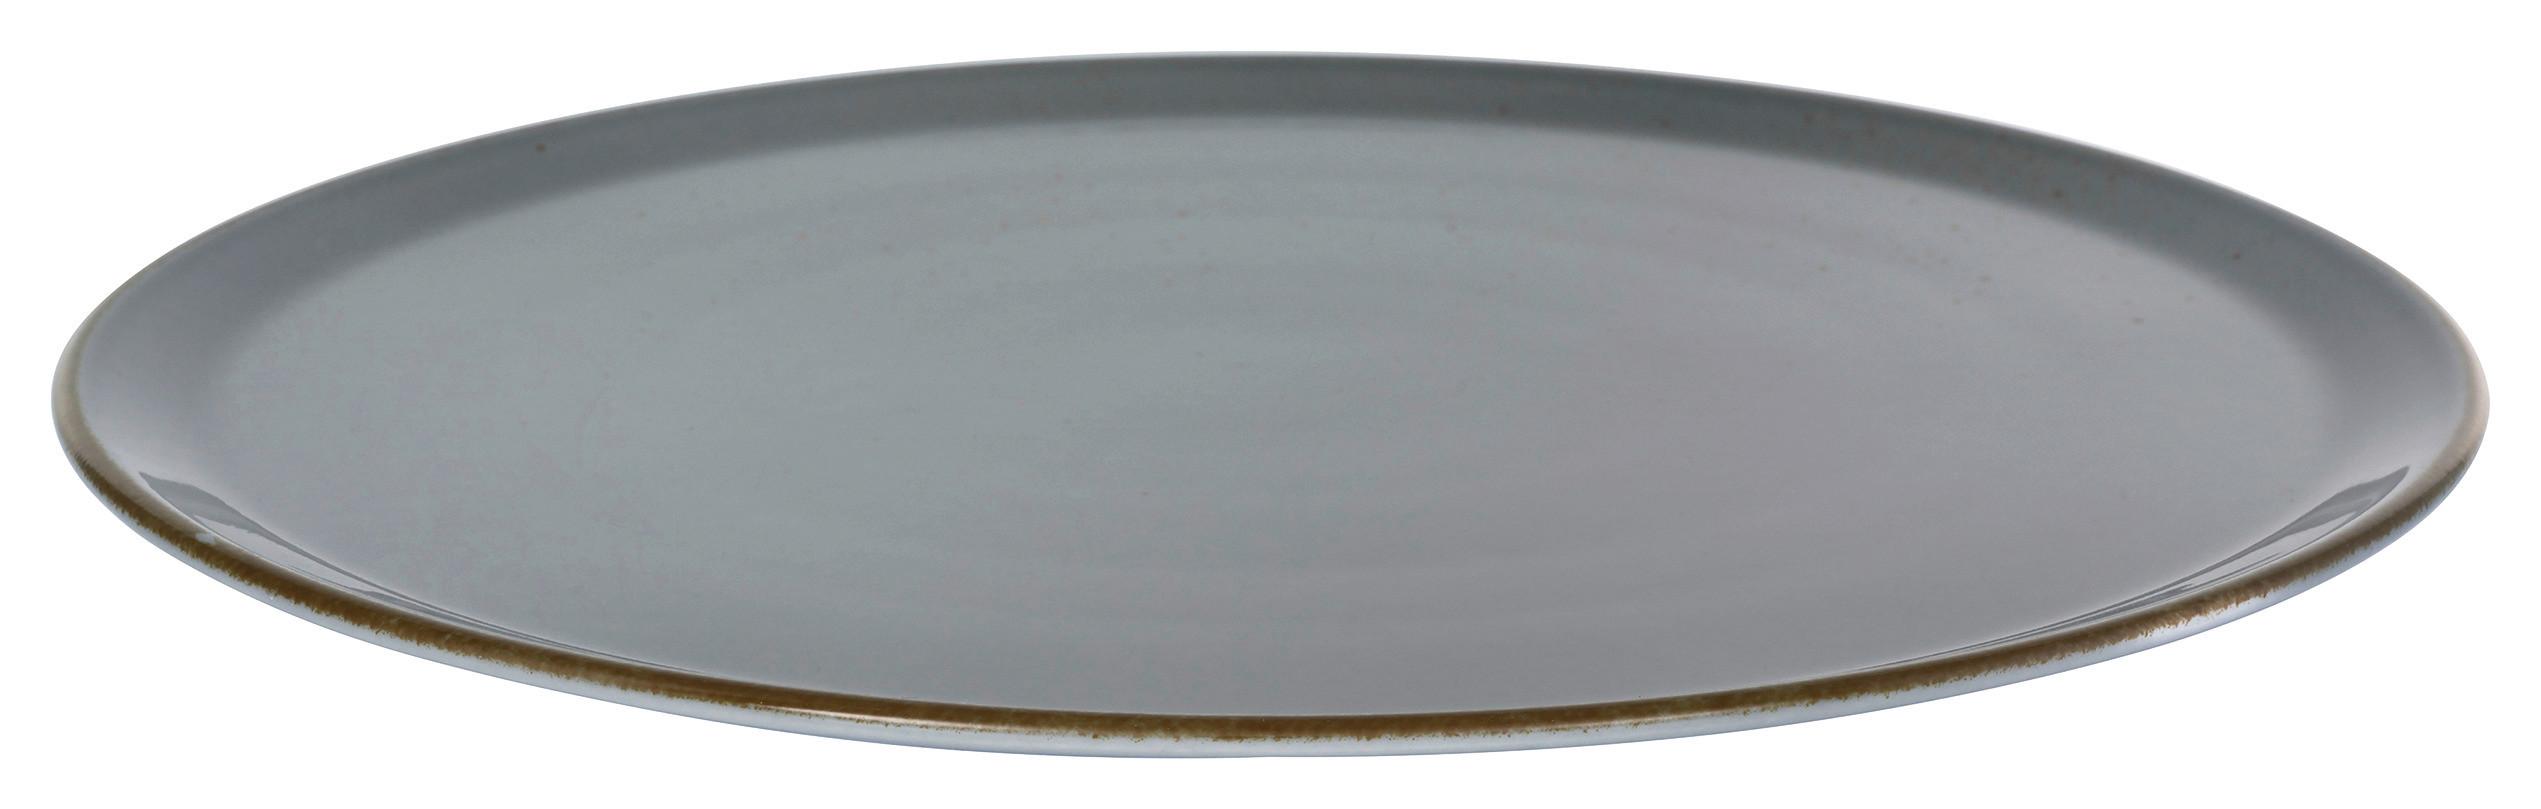 Farfurie pentru pizza Capri - gri, Modern, ceramică (33/33/2cm) - Premium Living